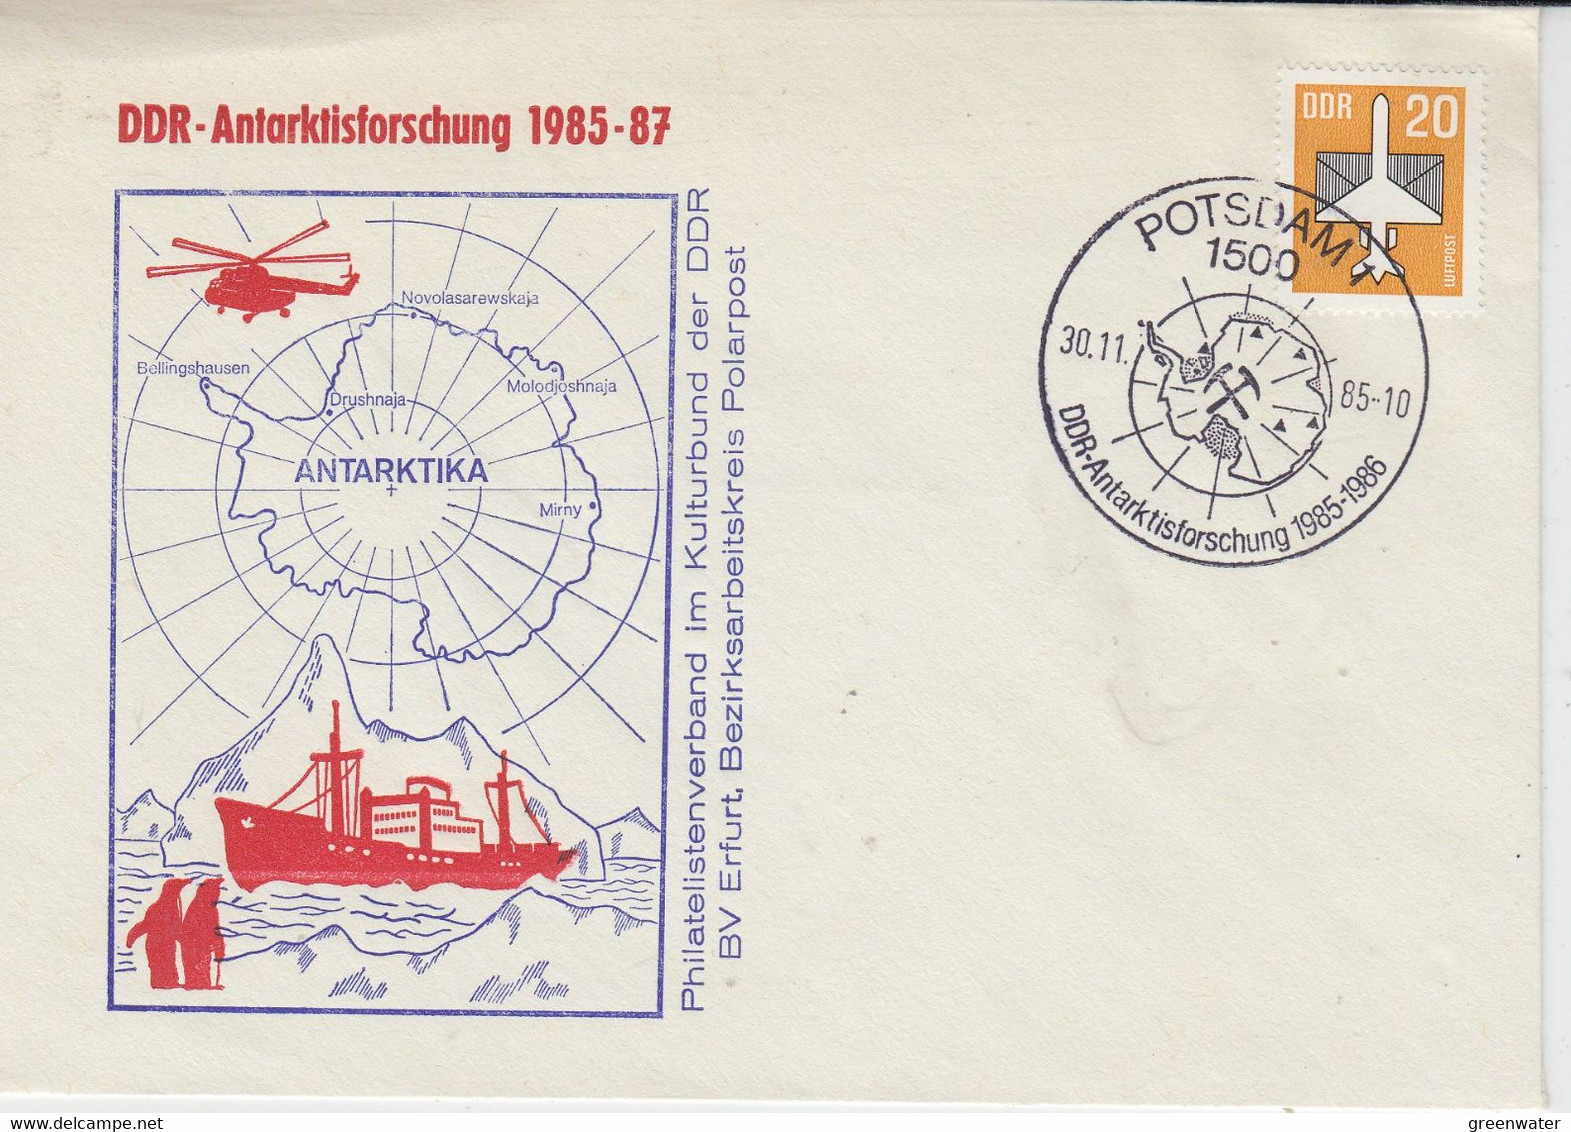 DDR 1985 Antarktisforschung DDRCa Potsdam 30-11-1985 (58020) - Research Programs